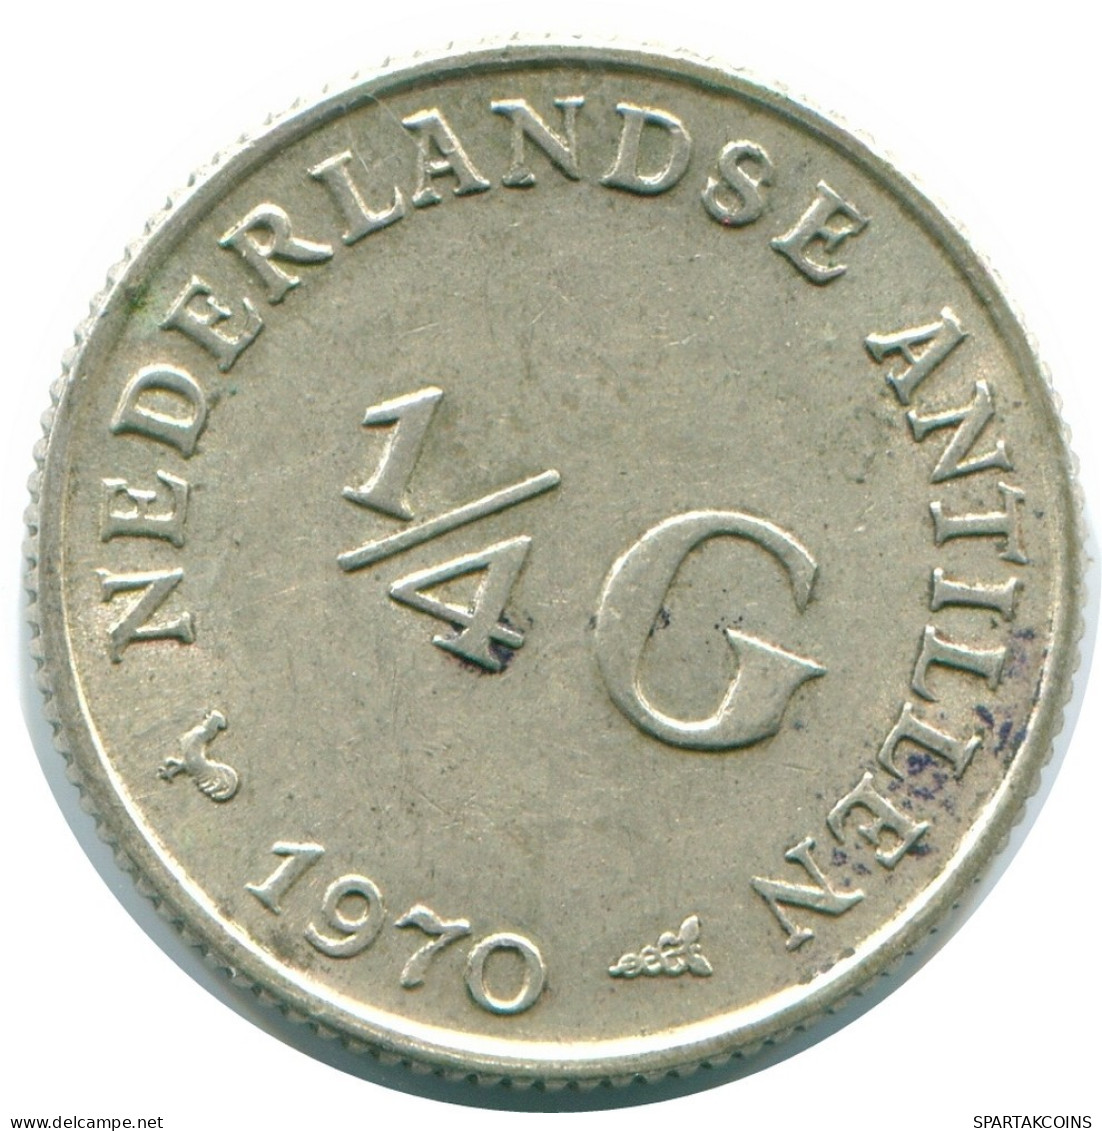 1/4 GULDEN 1970 NIEDERLÄNDISCHE ANTILLEN SILBER Koloniale Münze #NL11693.4.D.A - Netherlands Antilles